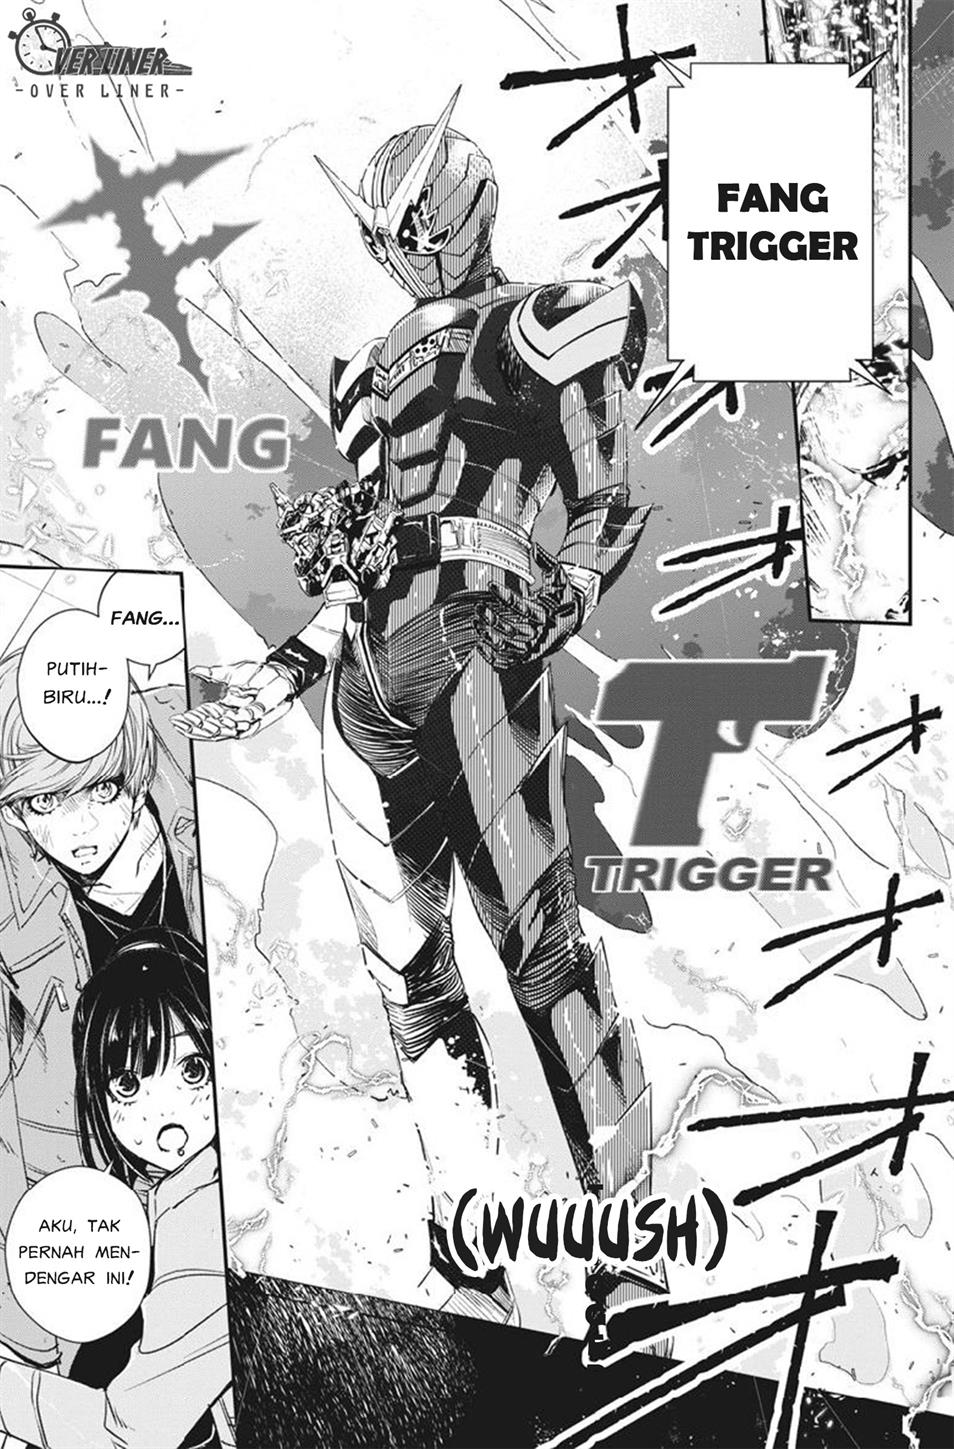 Kamen Rider W: Fuuto Tantei Chapter 65